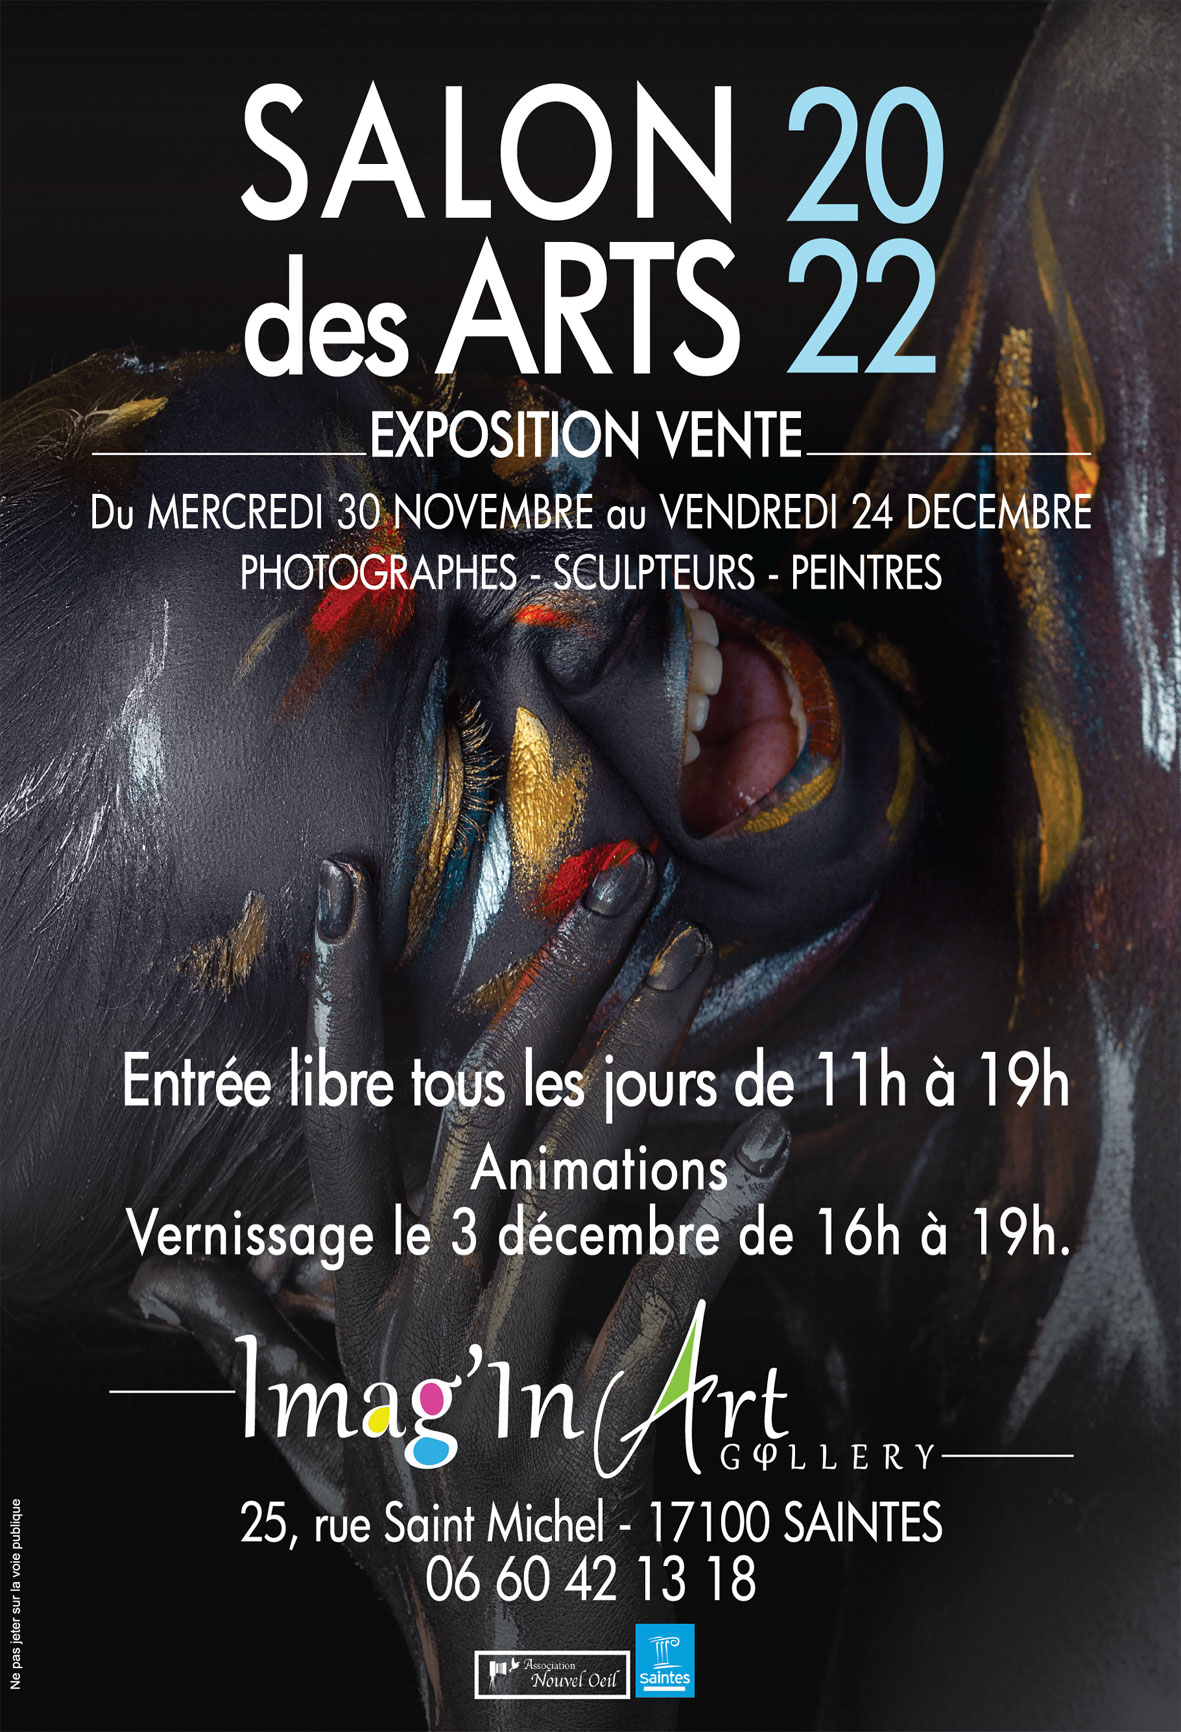 Galerie Imagin art, Salon des Arts 2022